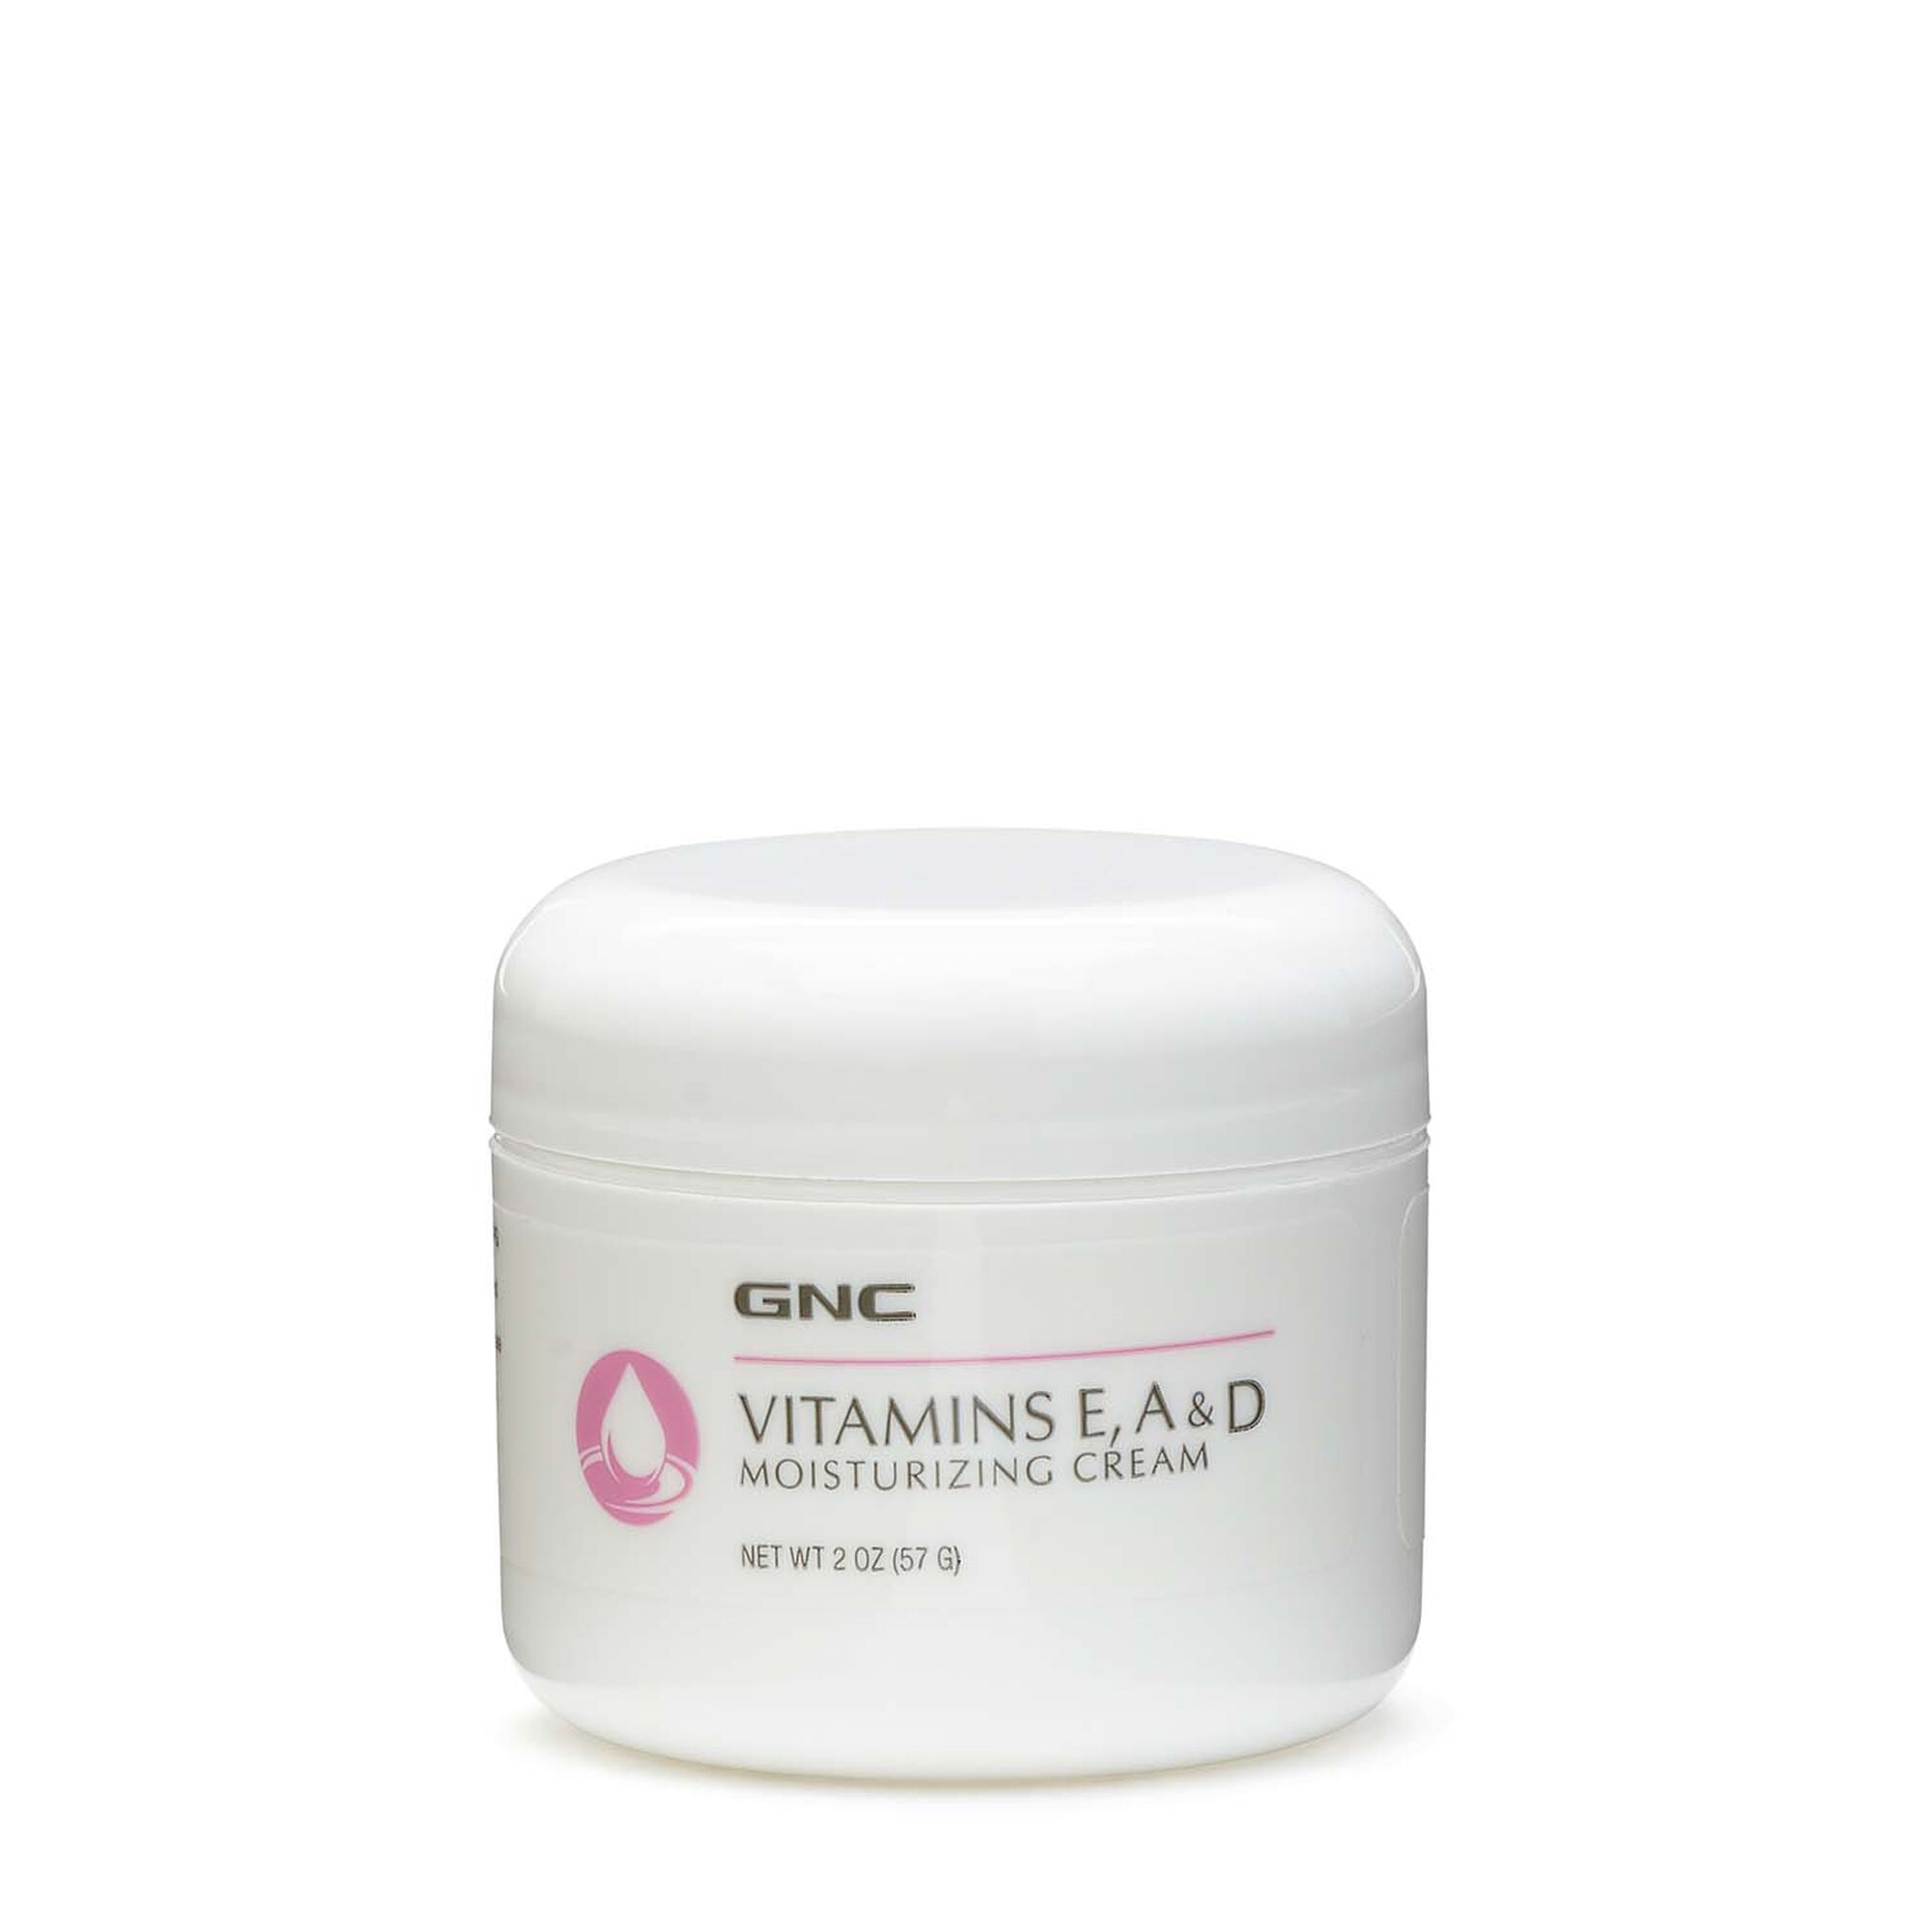 Gnc Vitamins E A D Moisturizing Cream